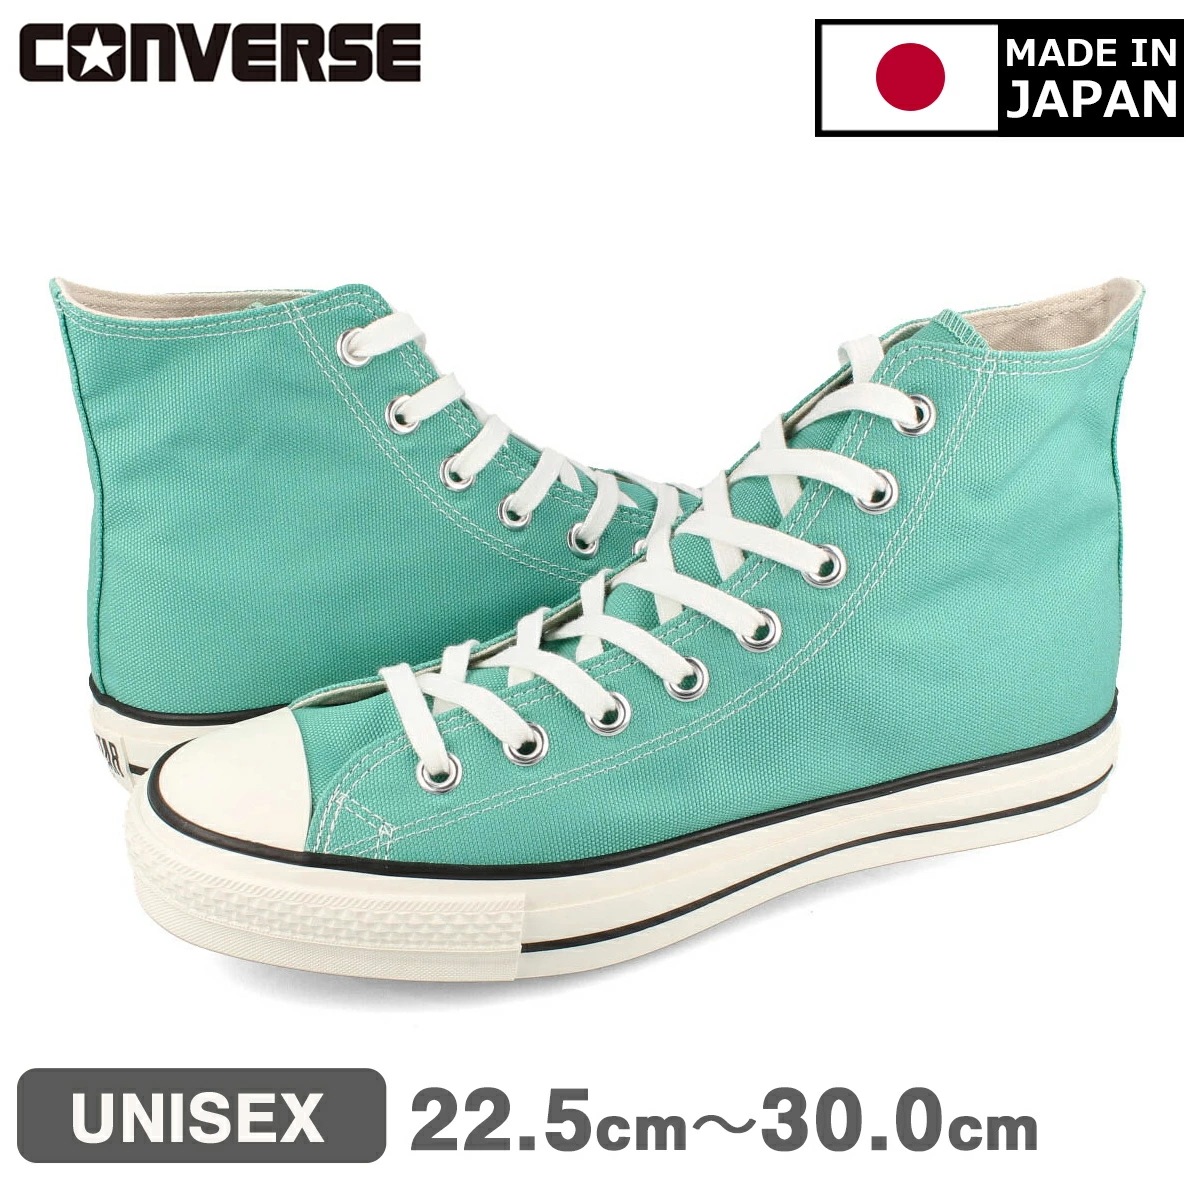 ConverseCONVERSE CANVAS ALL STAR J HI MINT GREEN 【MADE IN JAPAN】【日本製】